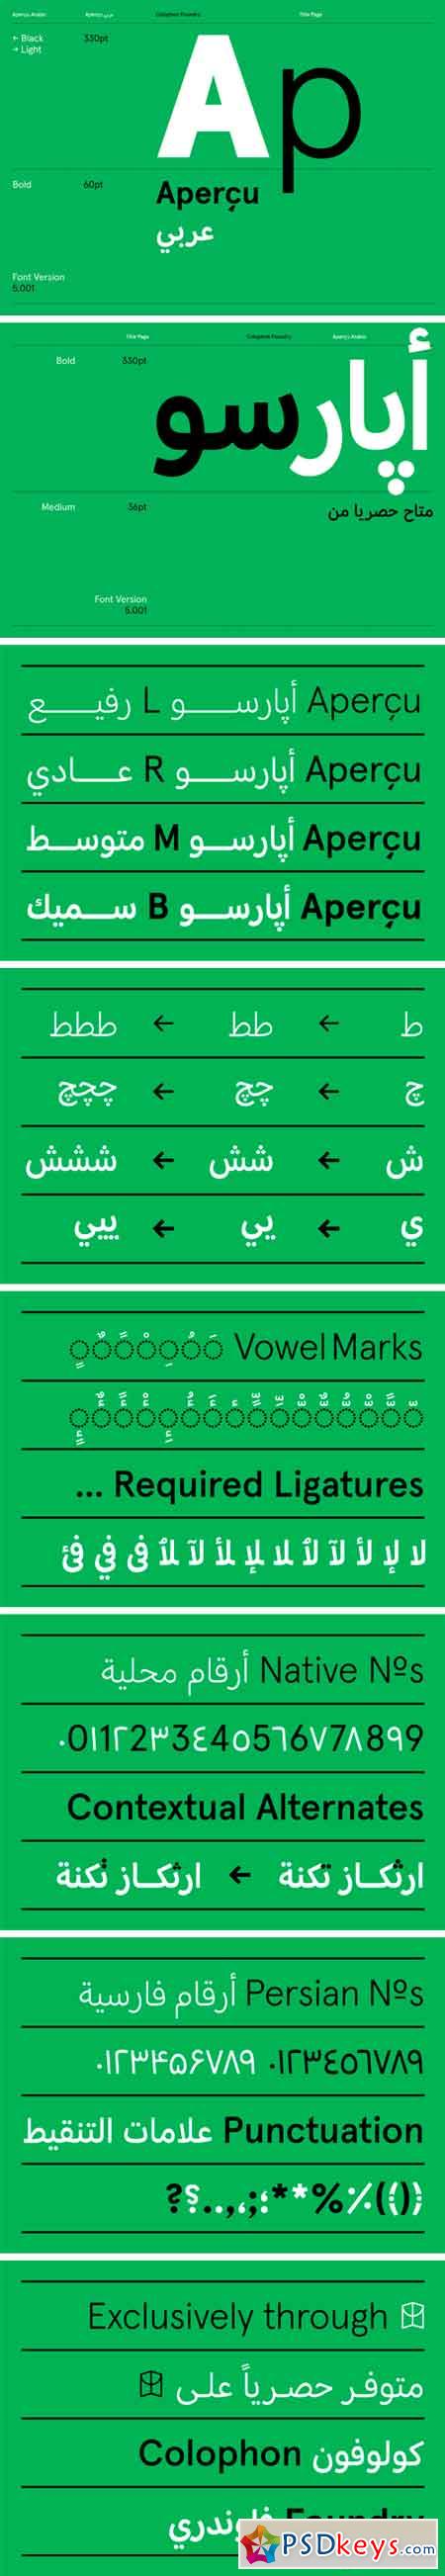 Apercu Arabic Font Family